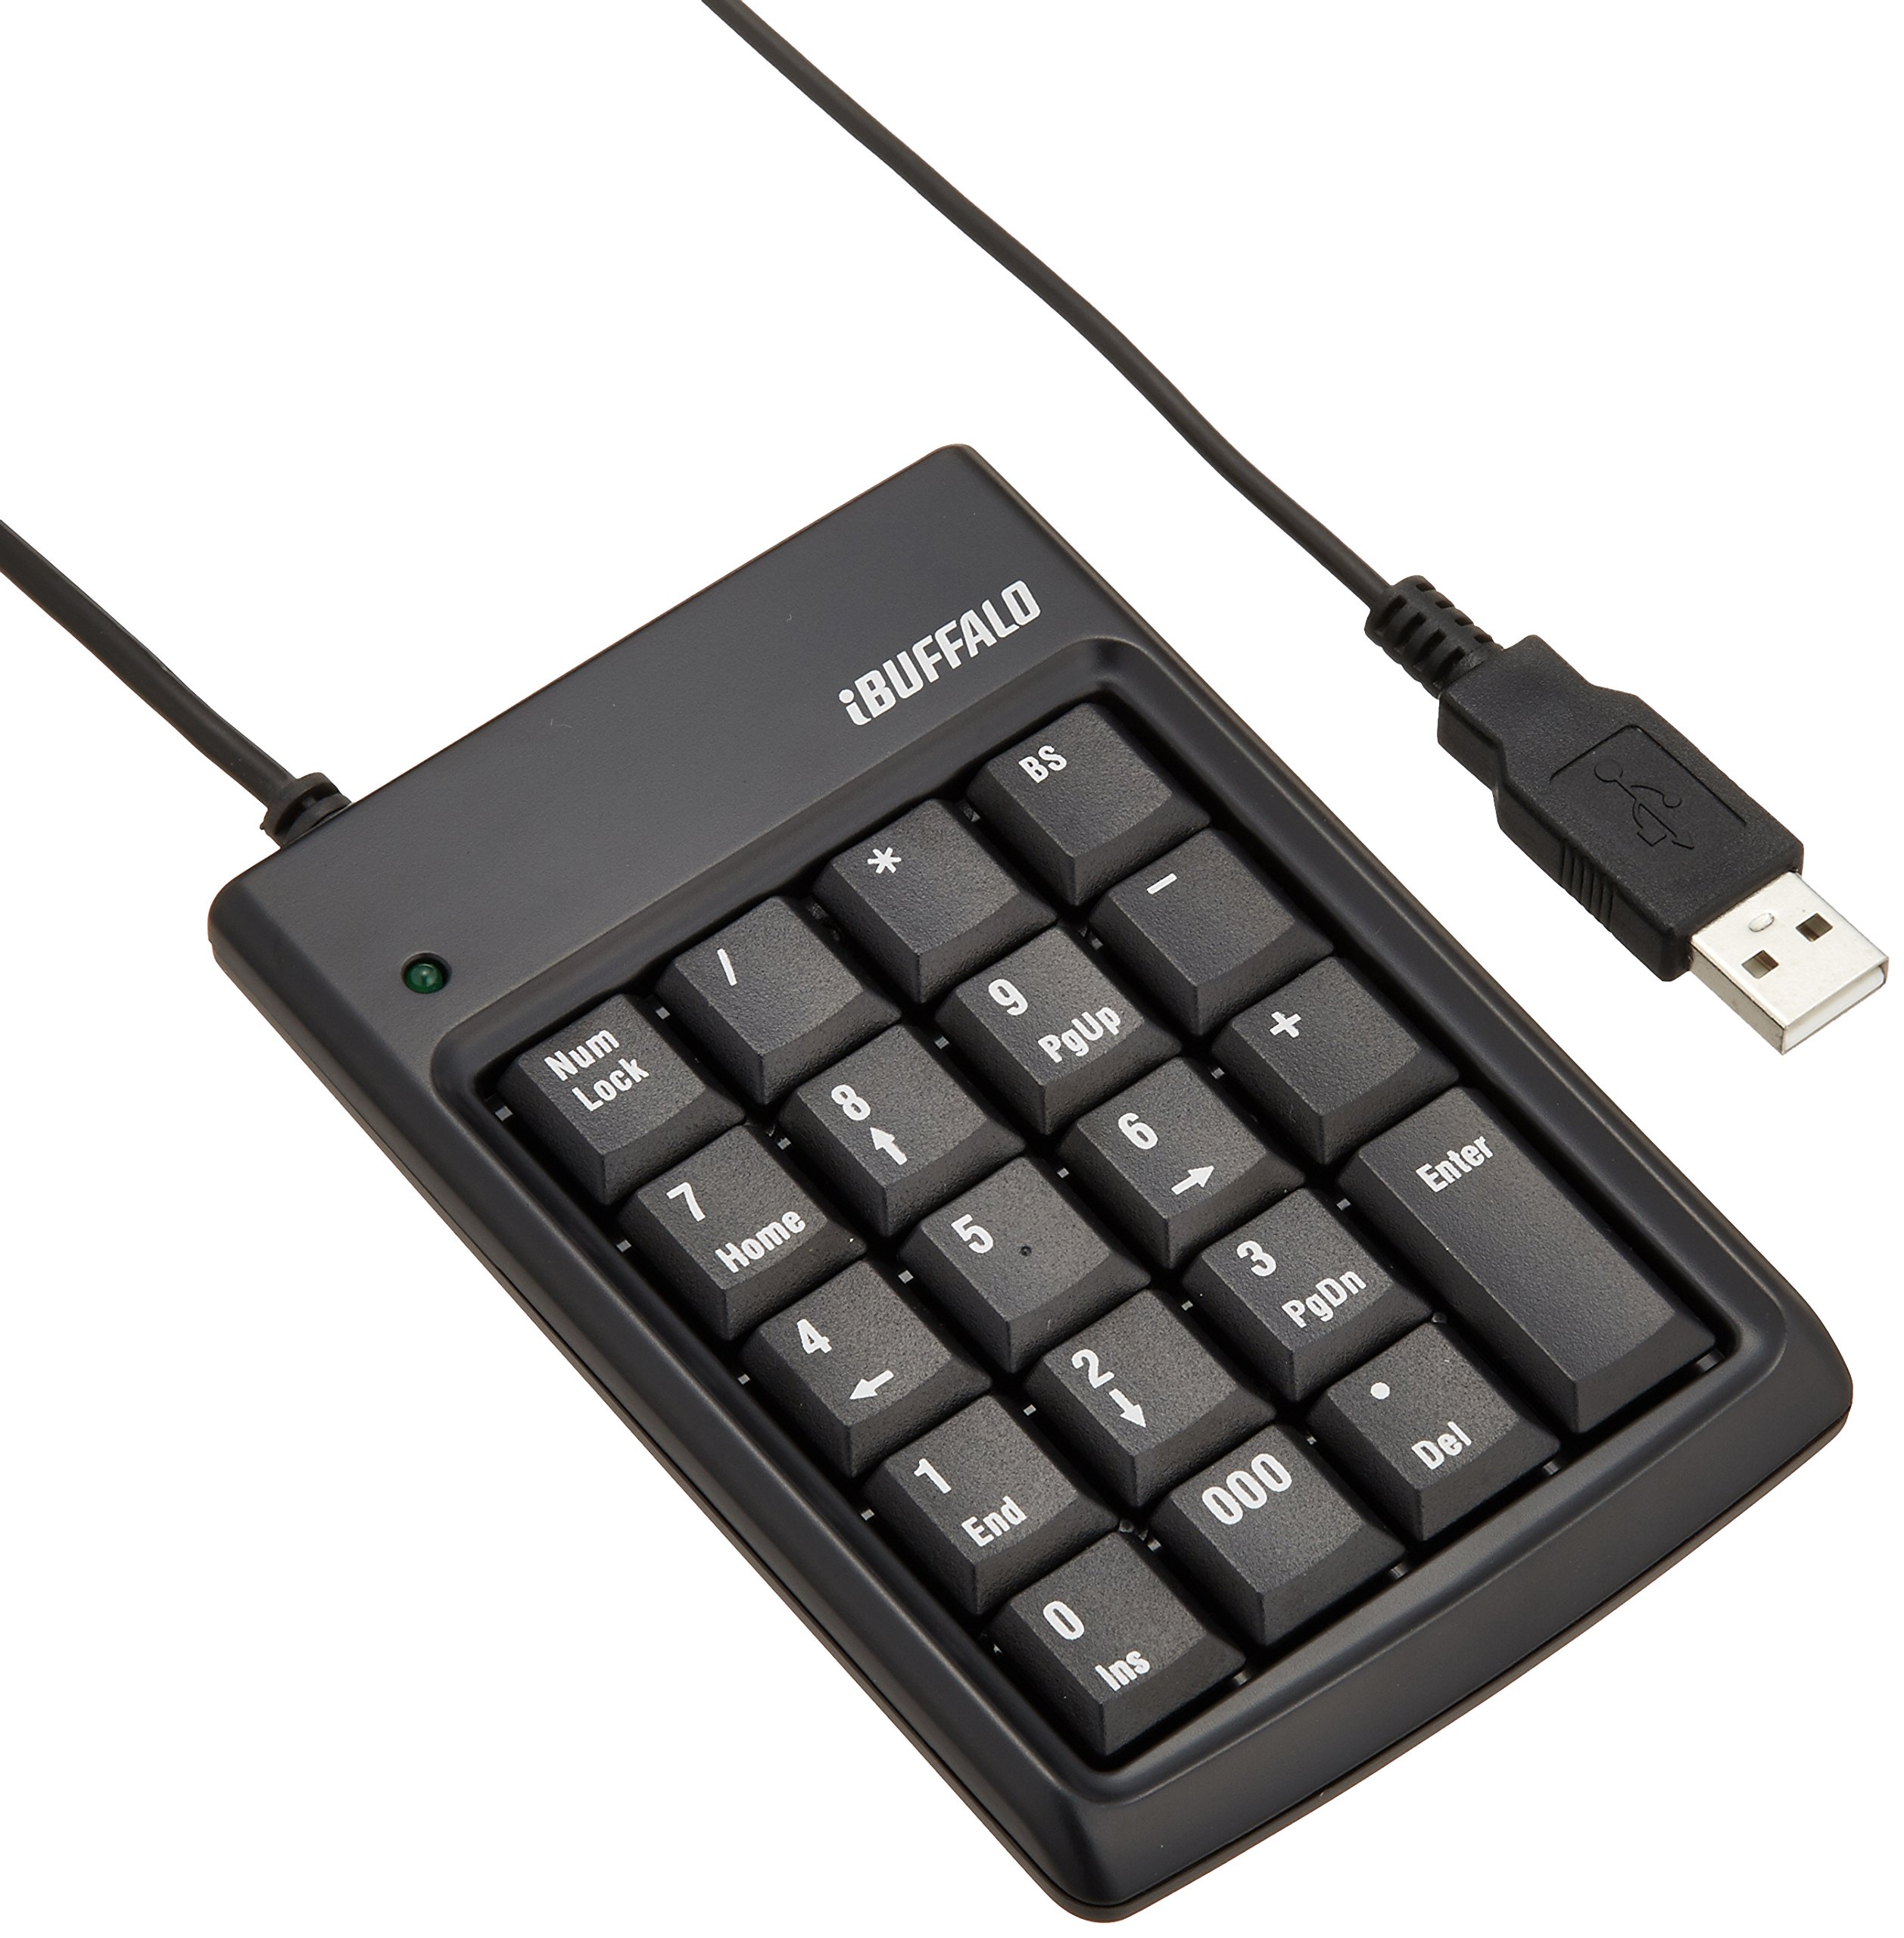 iBUFFALO テンキーボード USB接続 16mmピッチ ブラック BSTK01BK